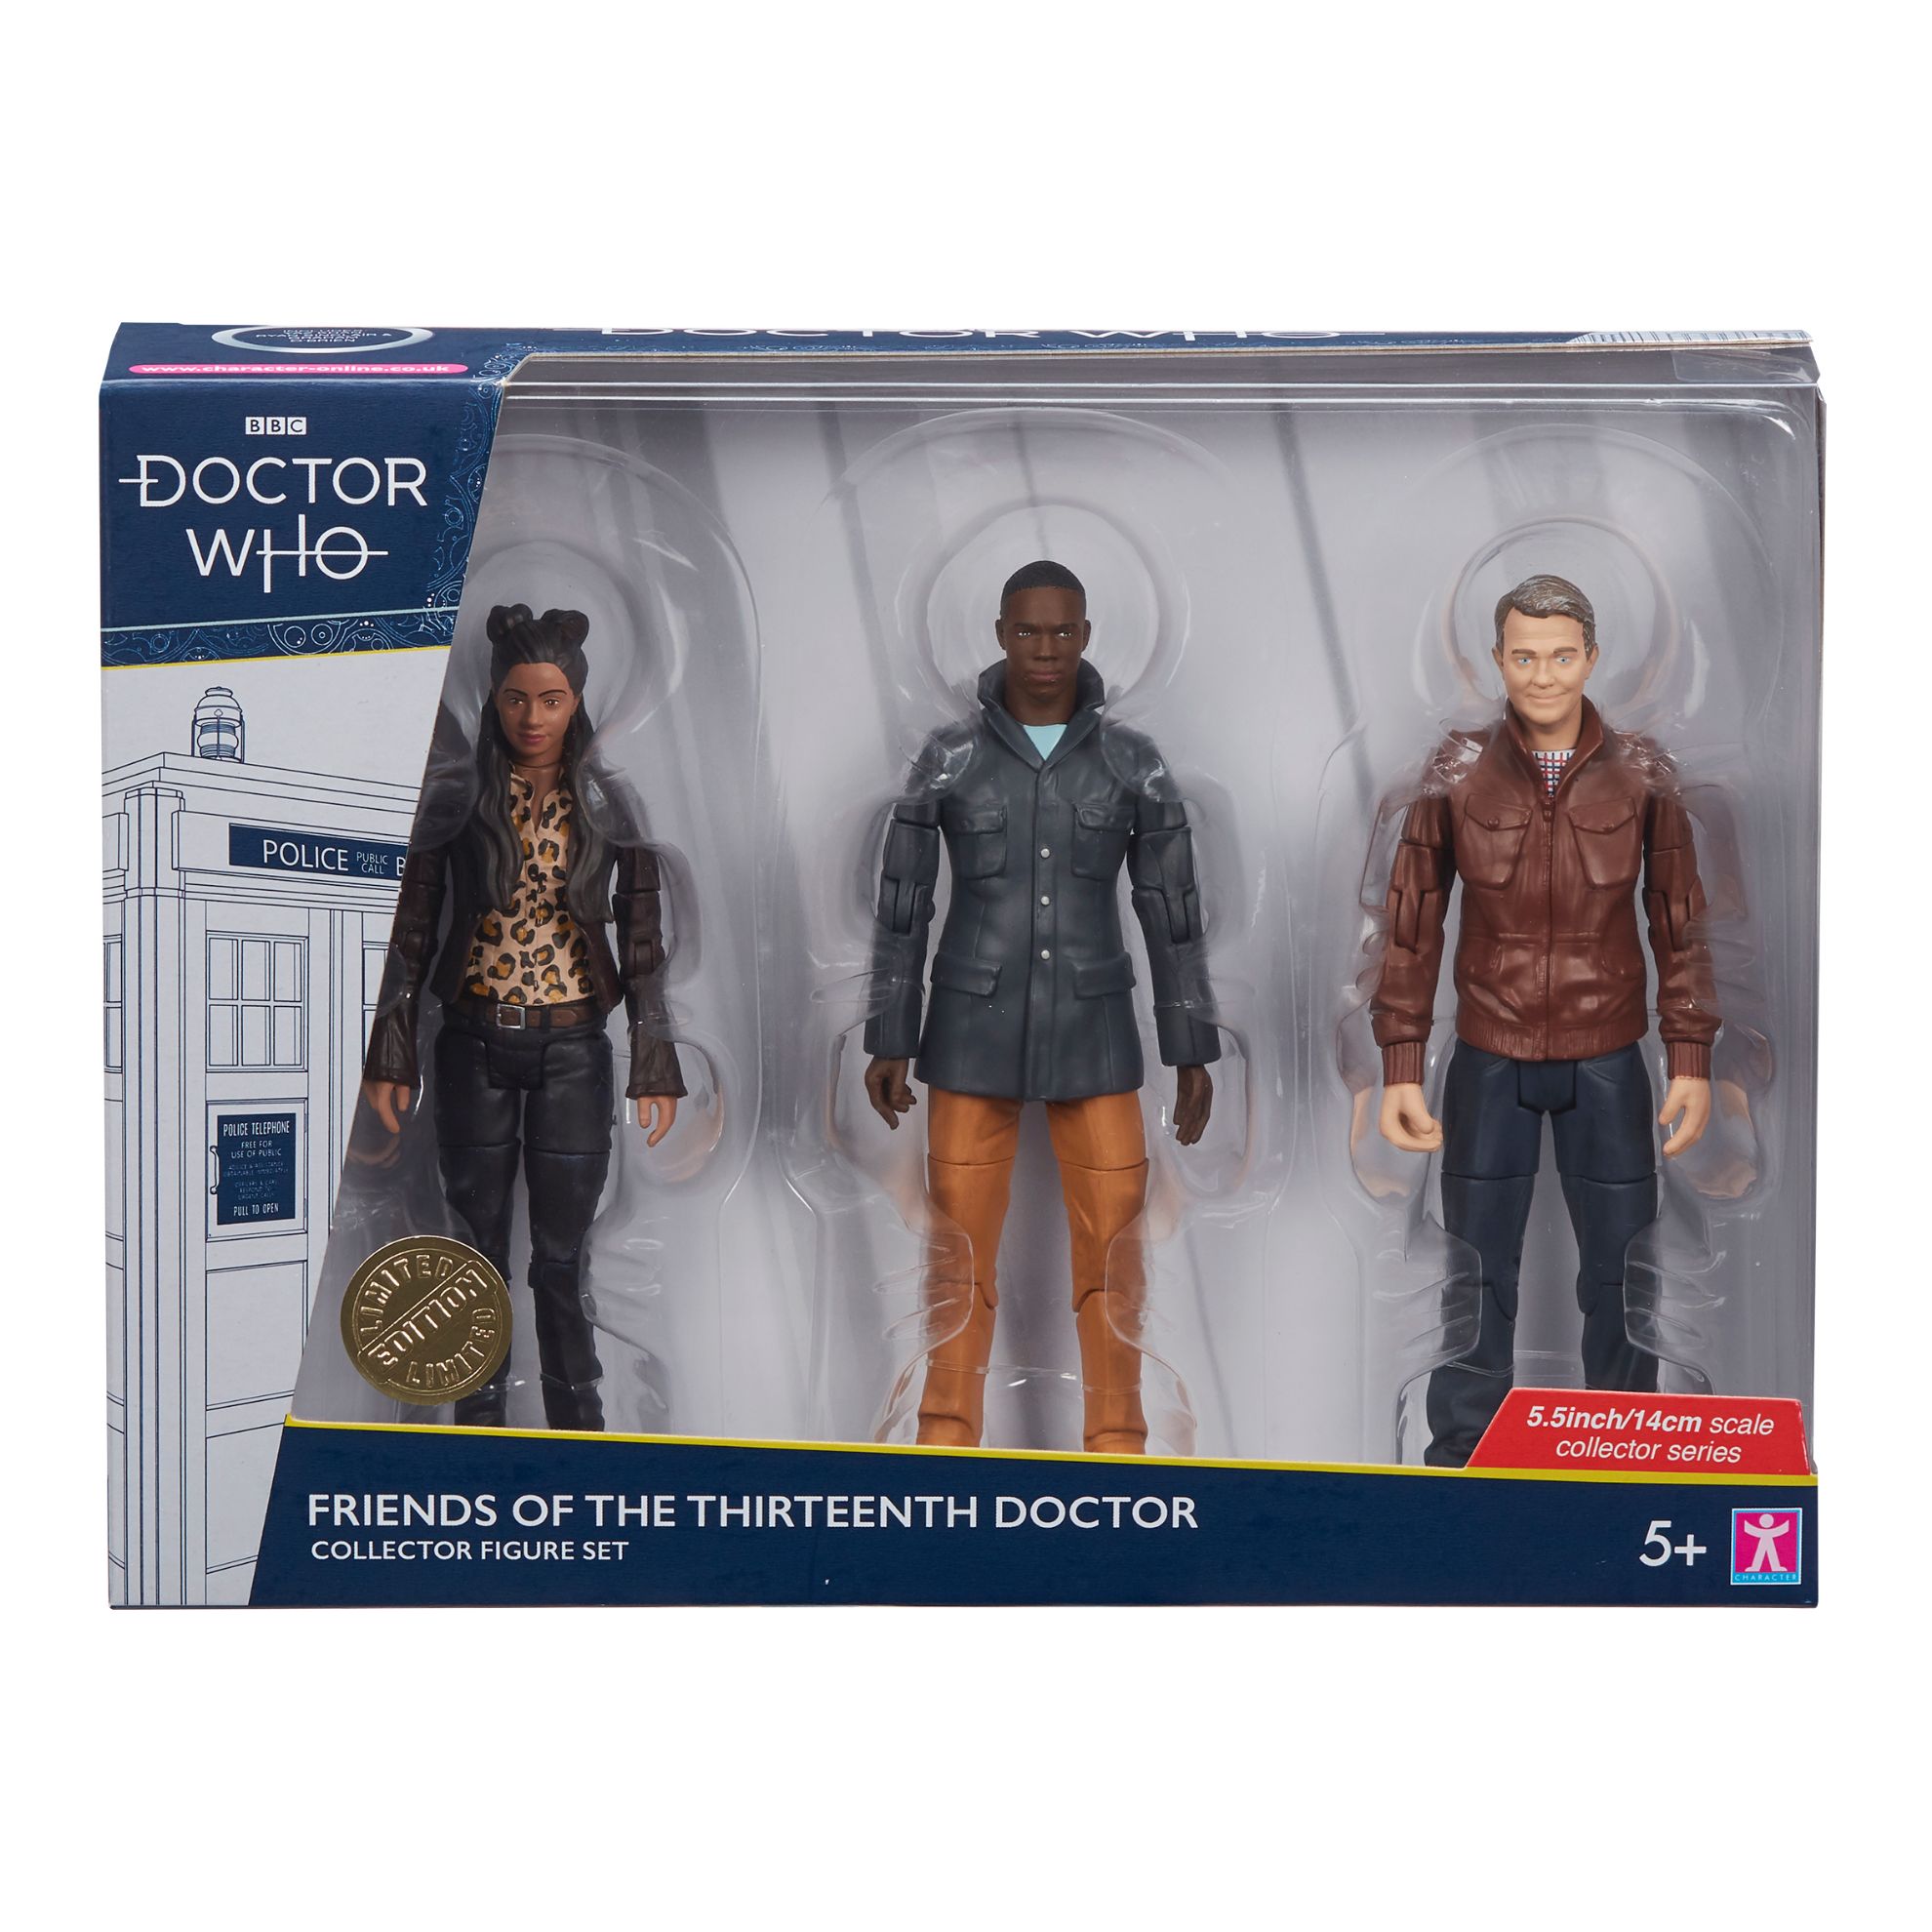 07245 Friends of the Thirteenth Doctor Collector Figure Set FBS.jpg